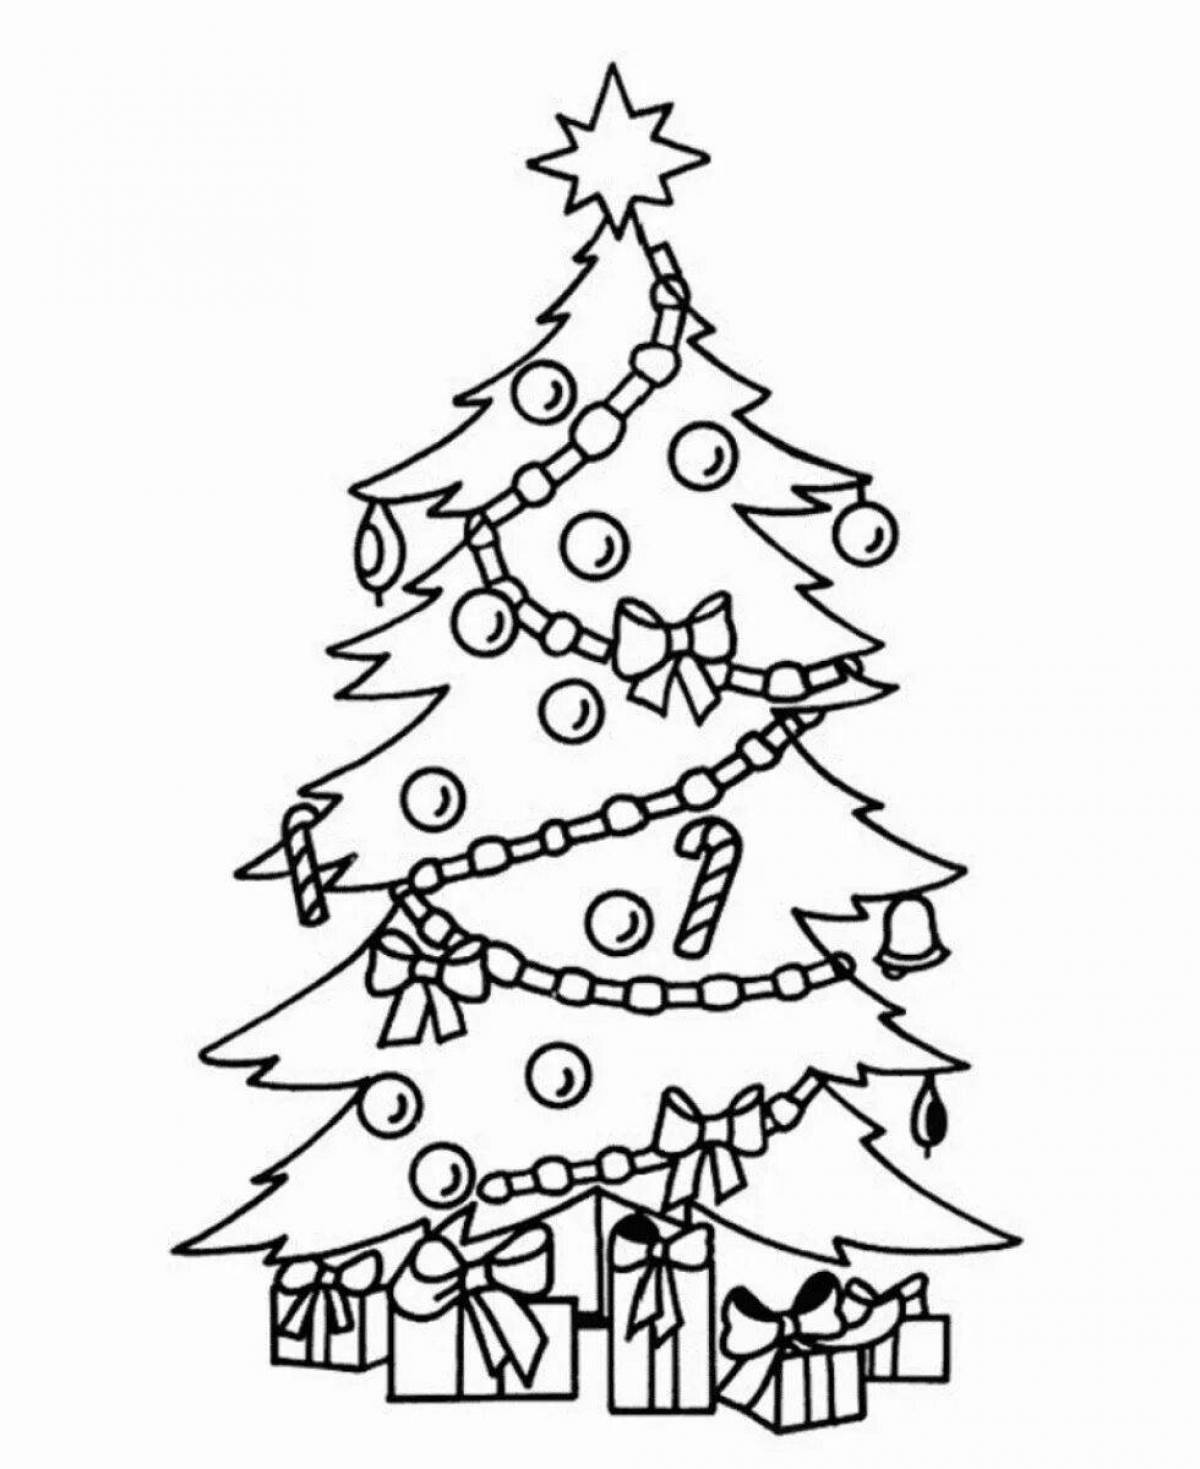 Fun coloring christmas tree for kids